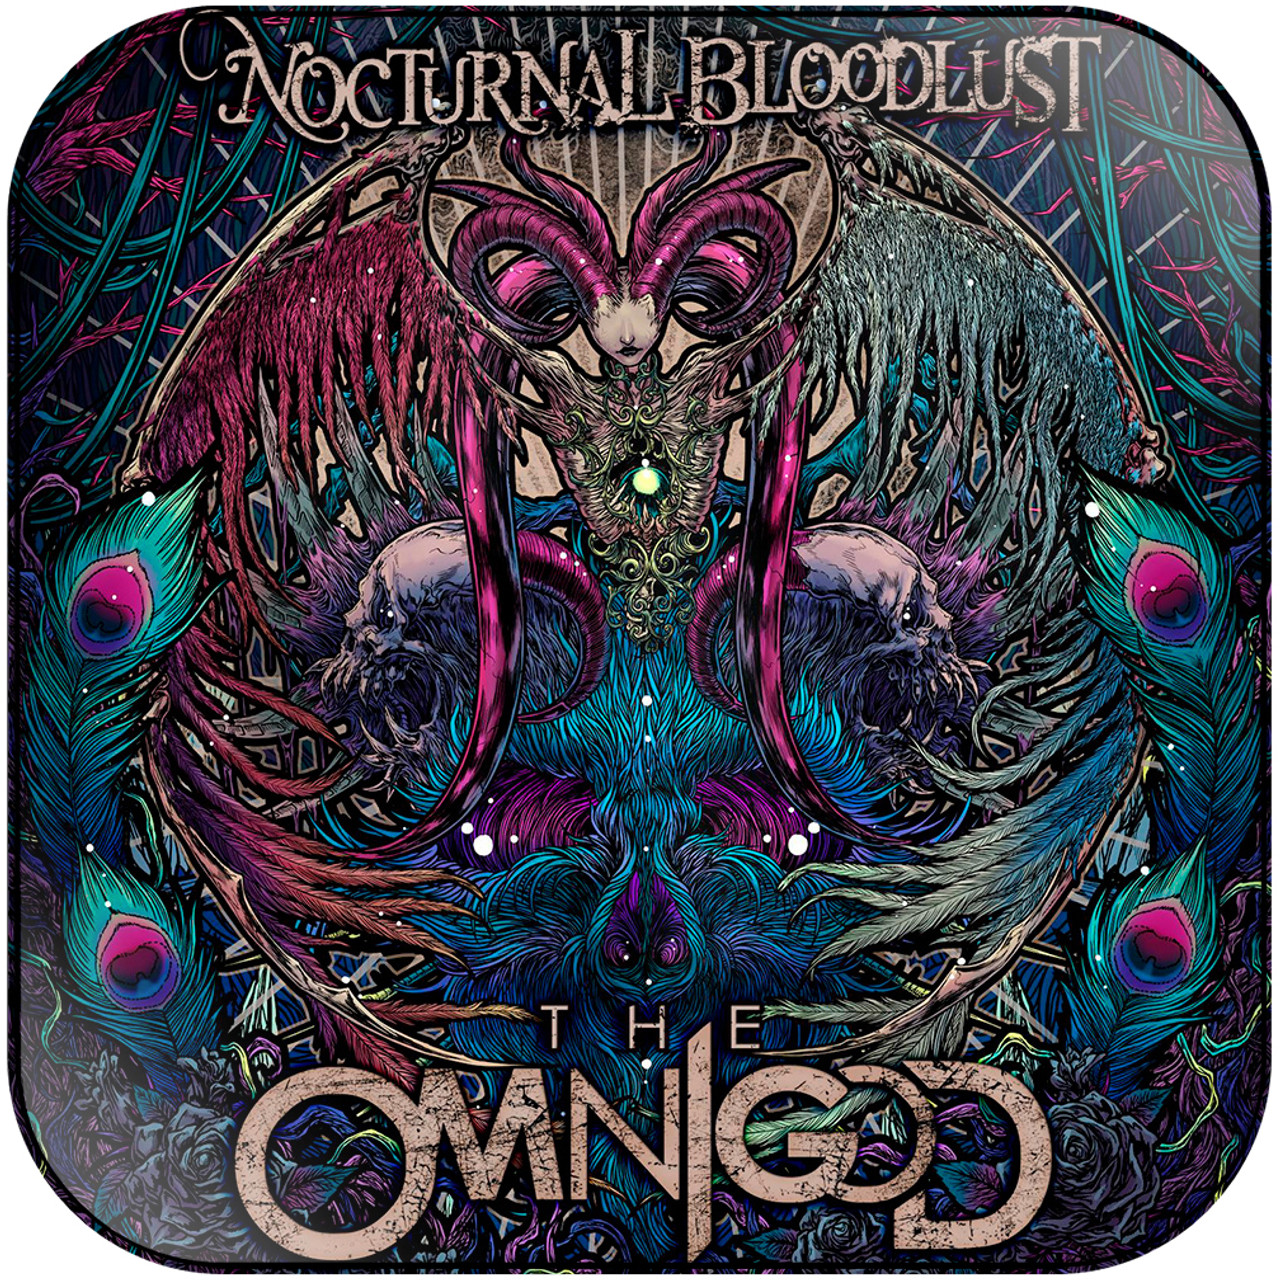 NOCTURNAL BLOODLUST - The Omnigod Album Cover Sticker